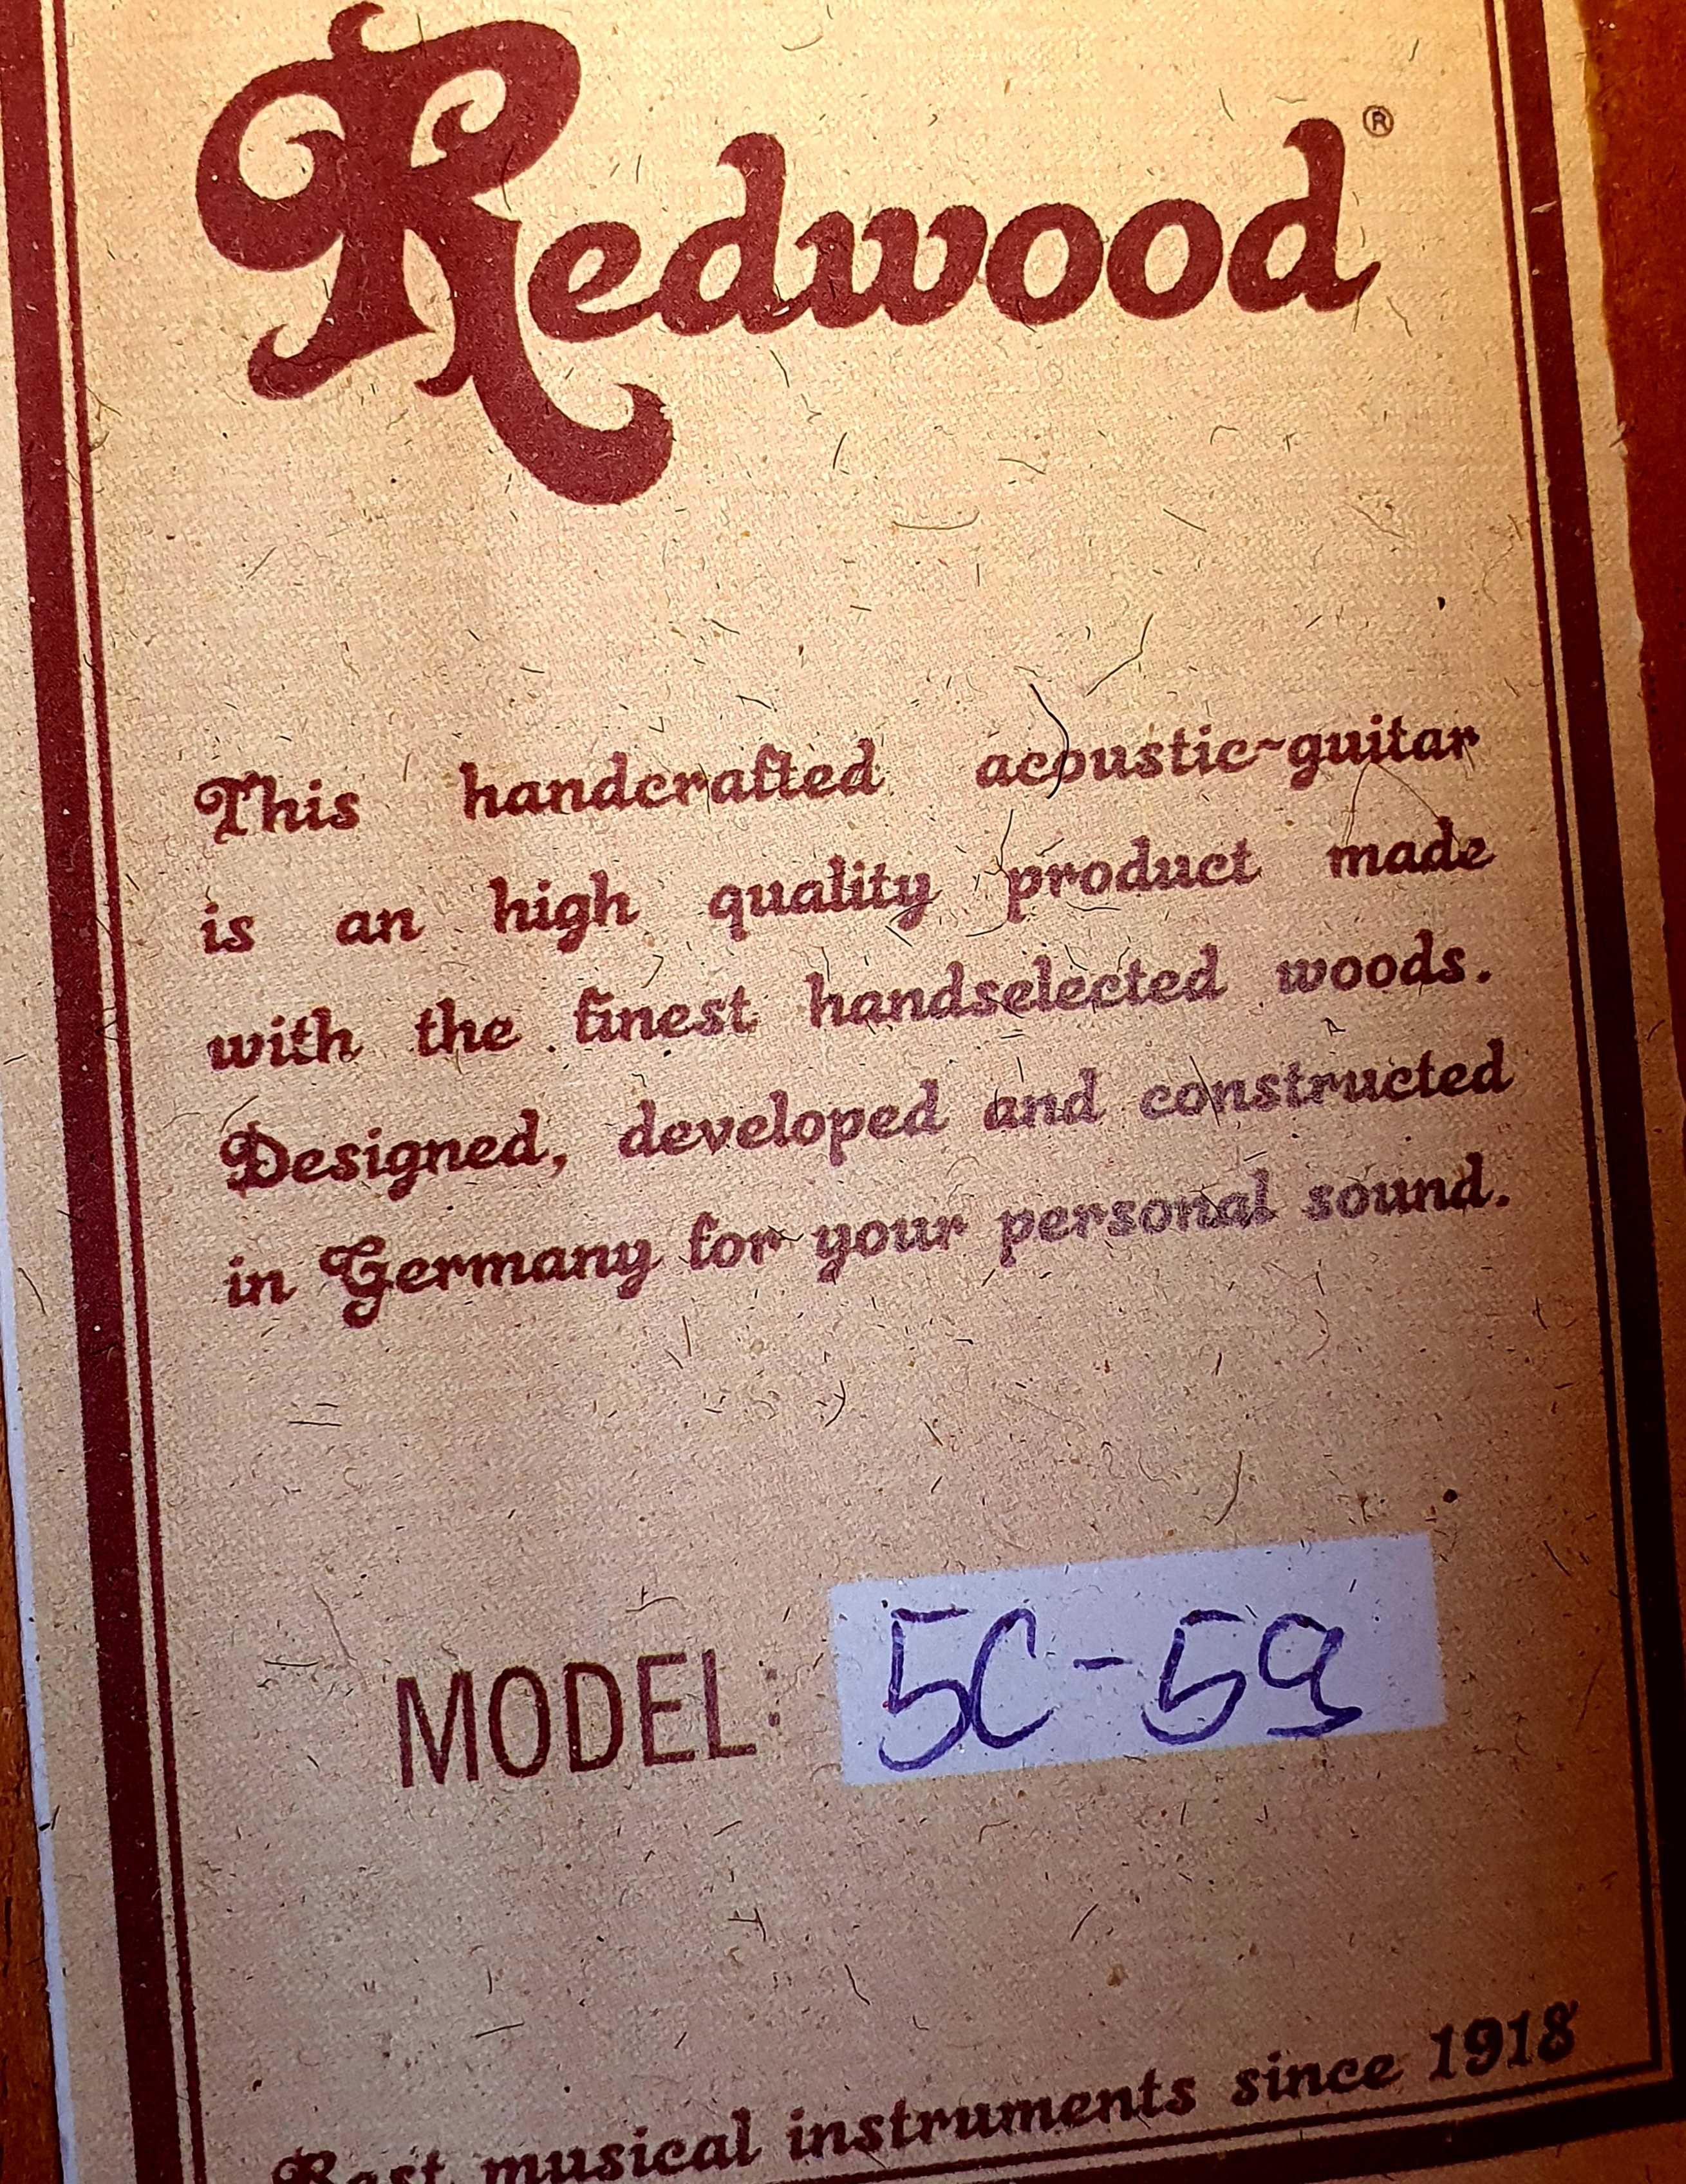 Gitara klasyczna 3/4 Redwood 5C-59, niemiecka